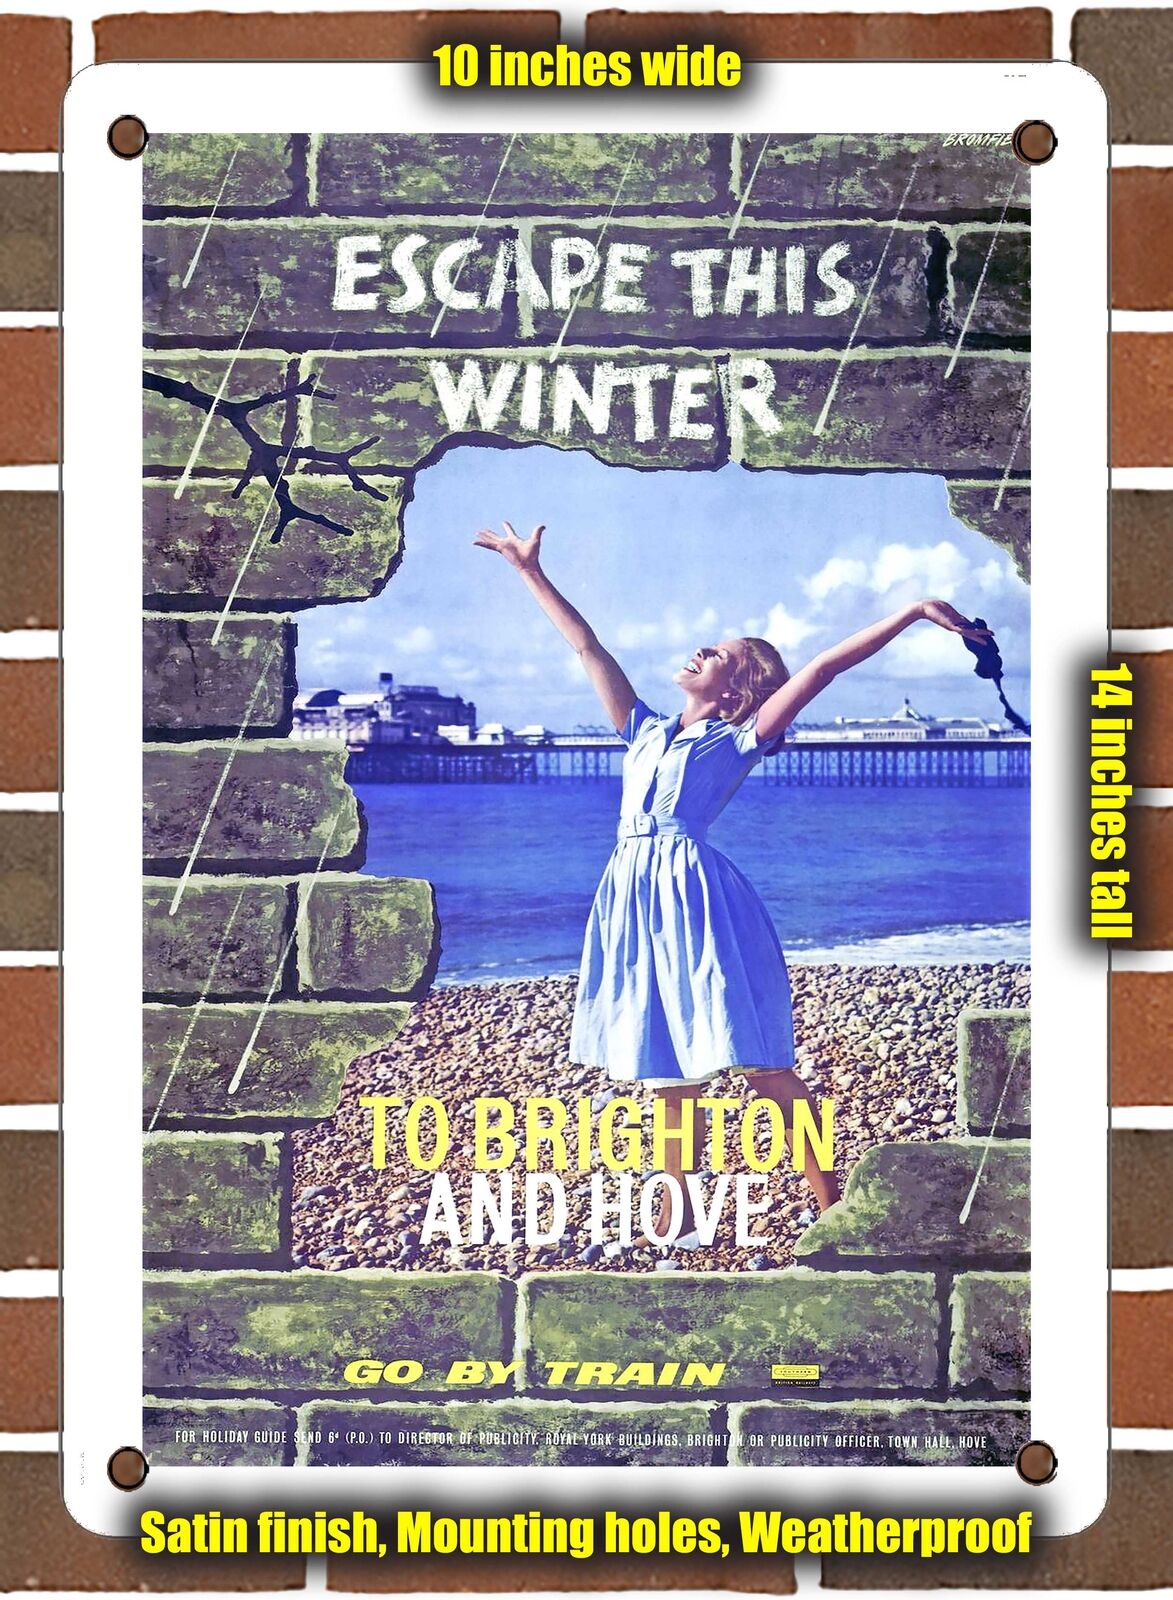 METAL SIGN - 1961 Escape This Winter to Brighton and Hove British Rail